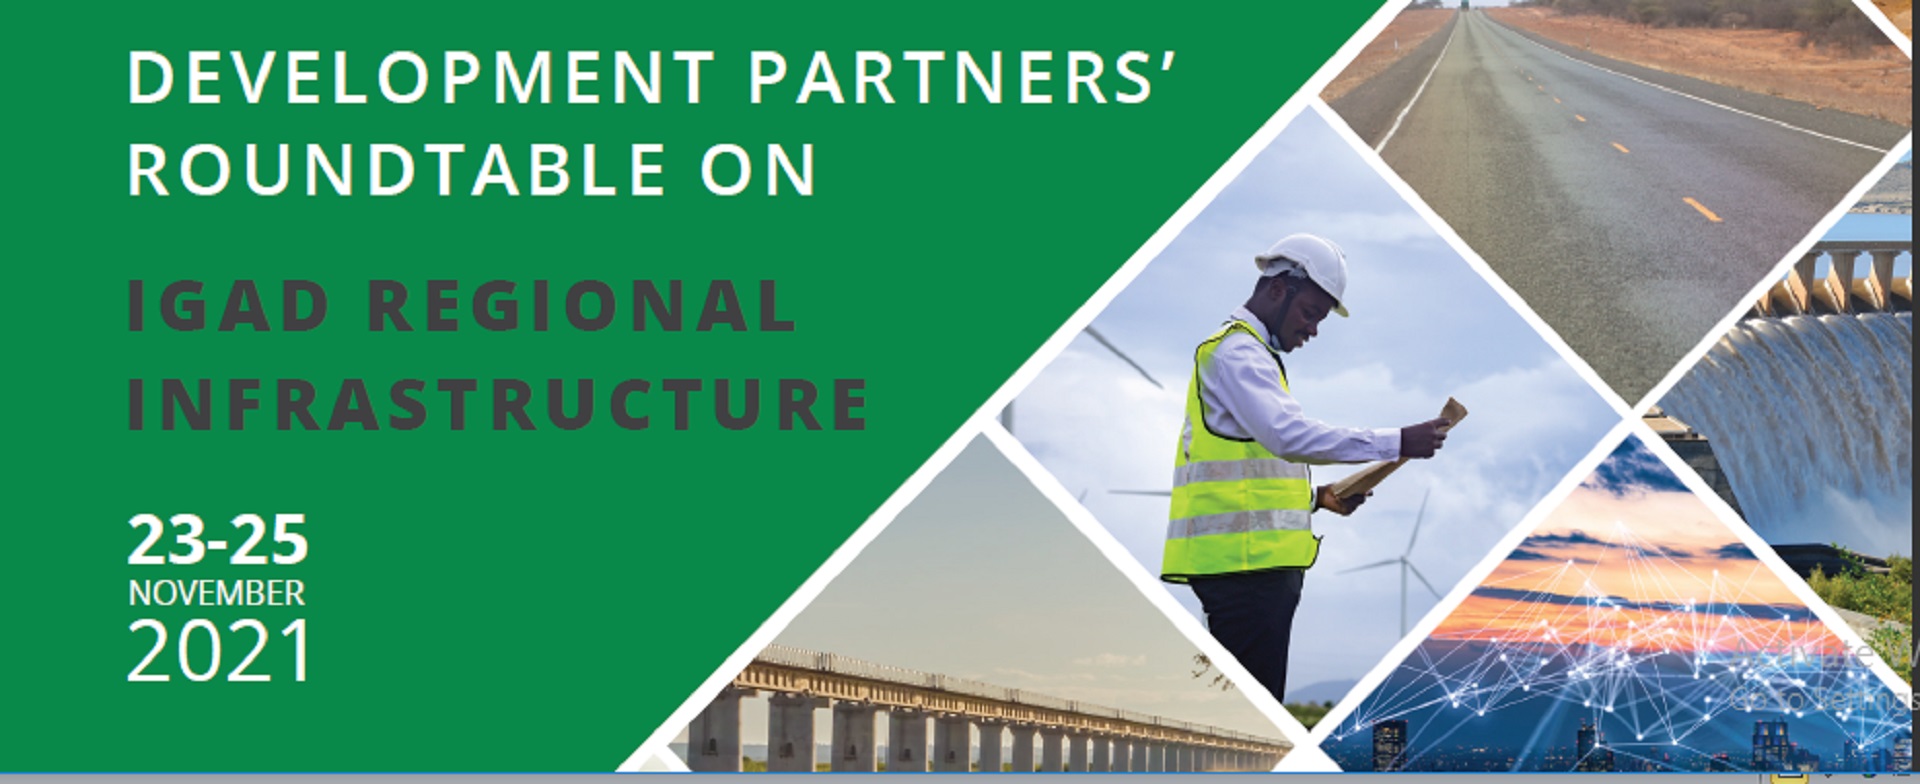 Development Partners Round Table Conference for IGAD Regional Infrastructure Master Plan (IRIMP), November 23 – 25, 2021 Nairobi, Kenya